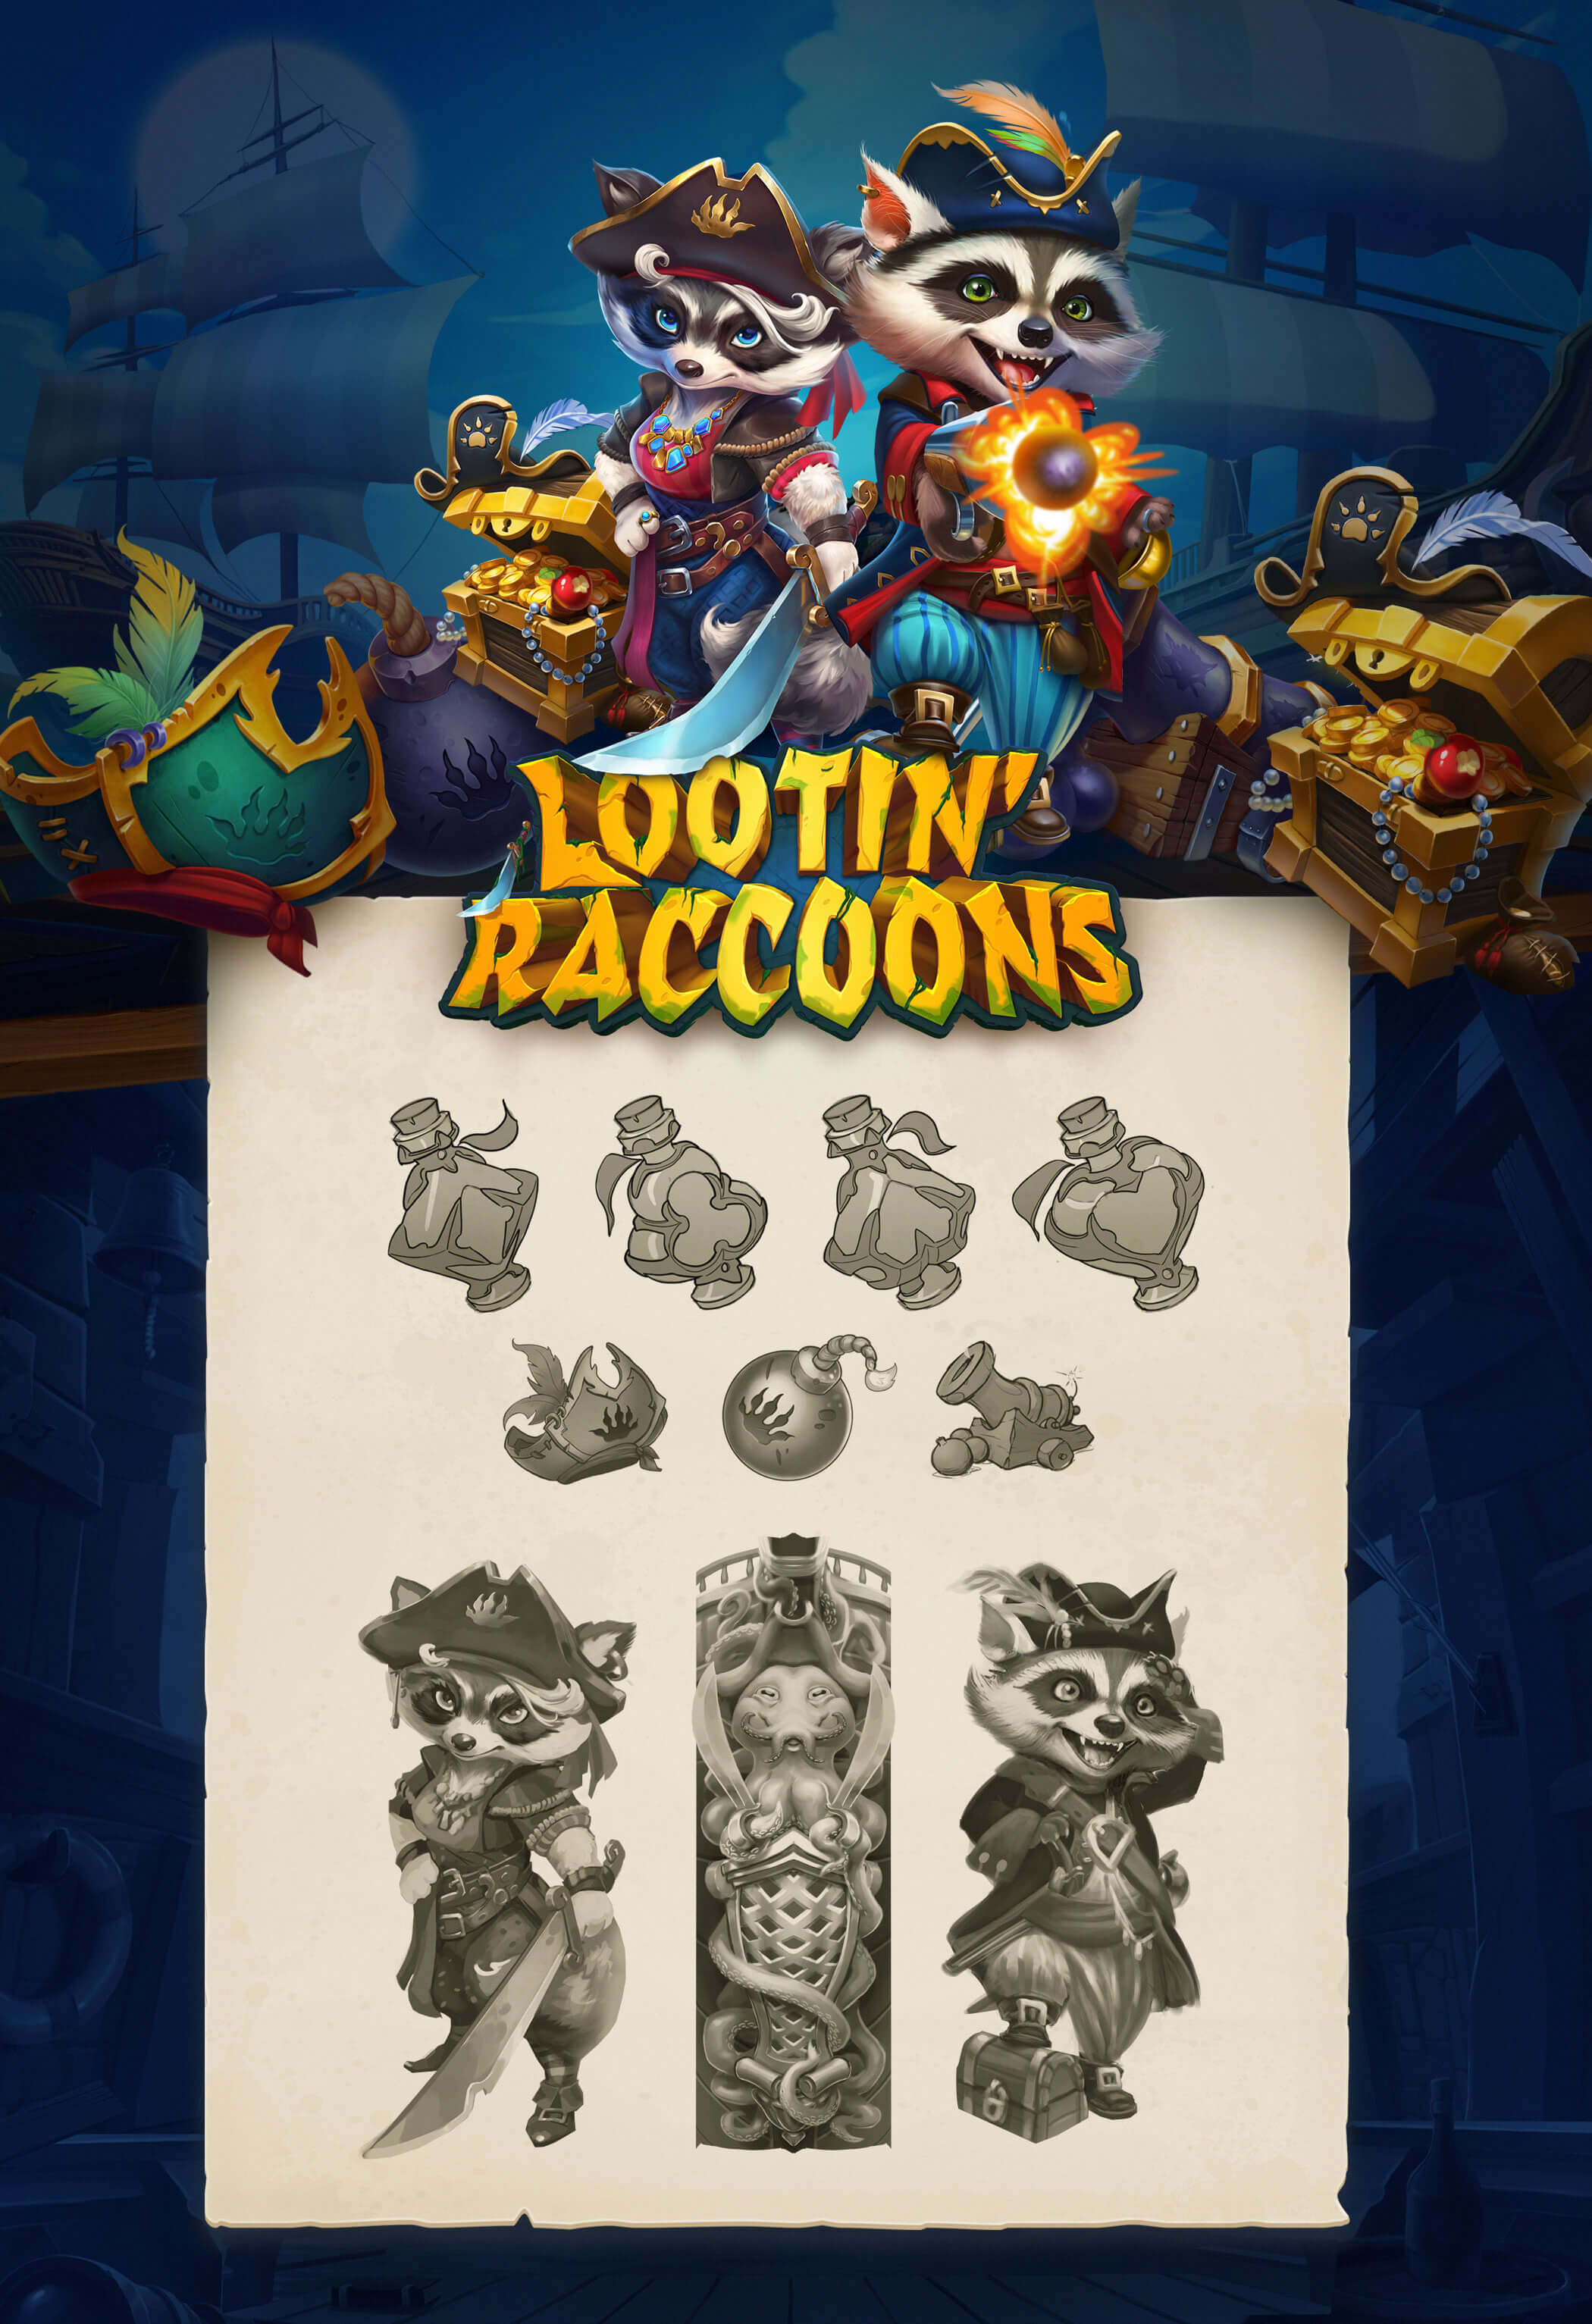 Lootin’ Raccoons slot machine concept art